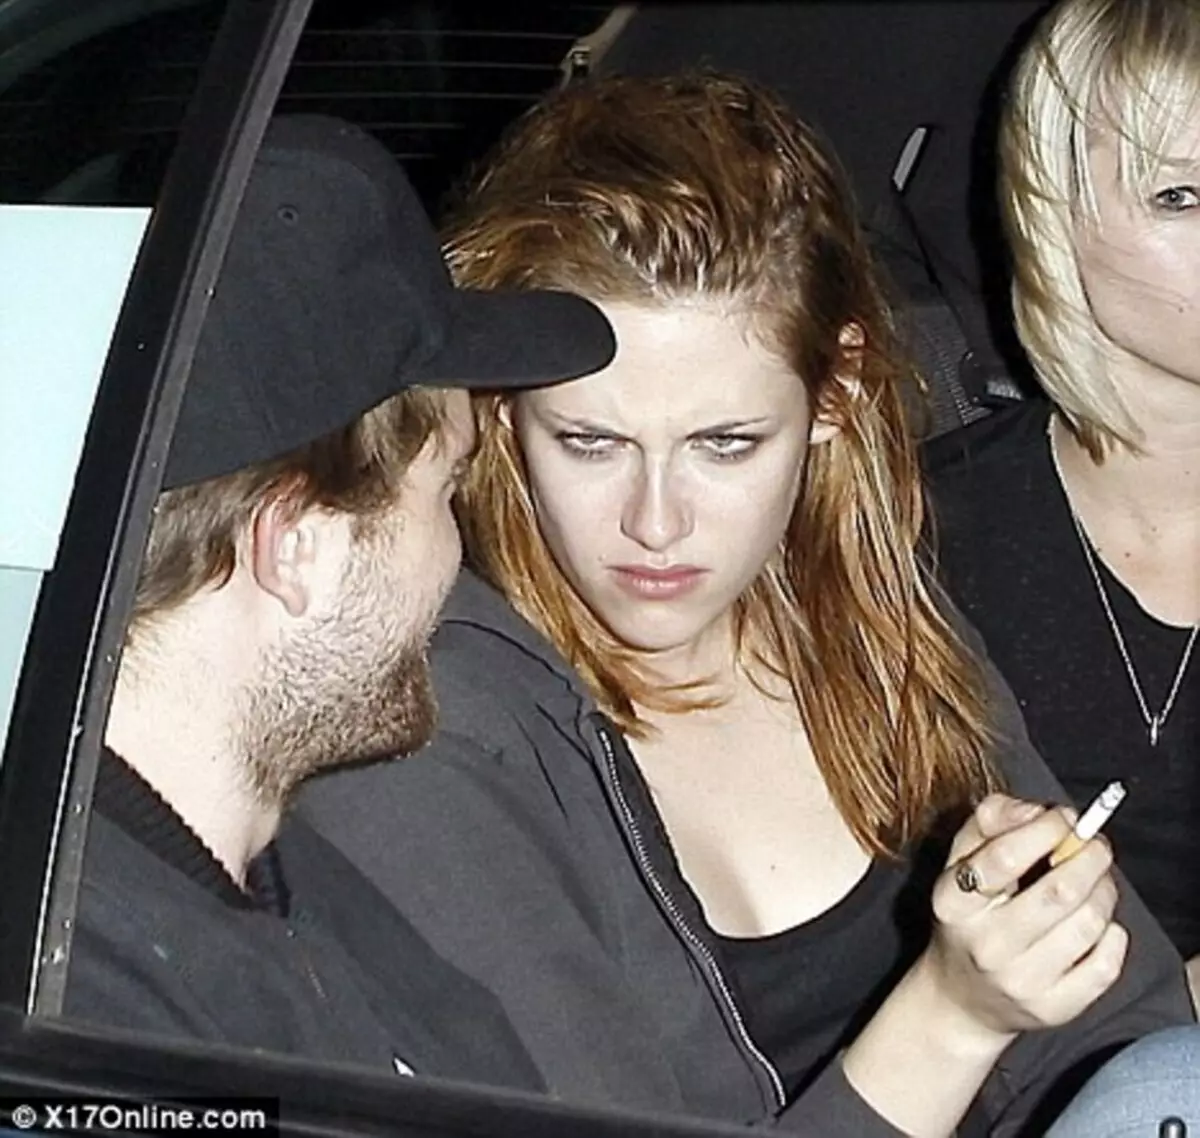 Kristen, ataata mulimuli ane. E te feiloai ma Robert Pattinson!